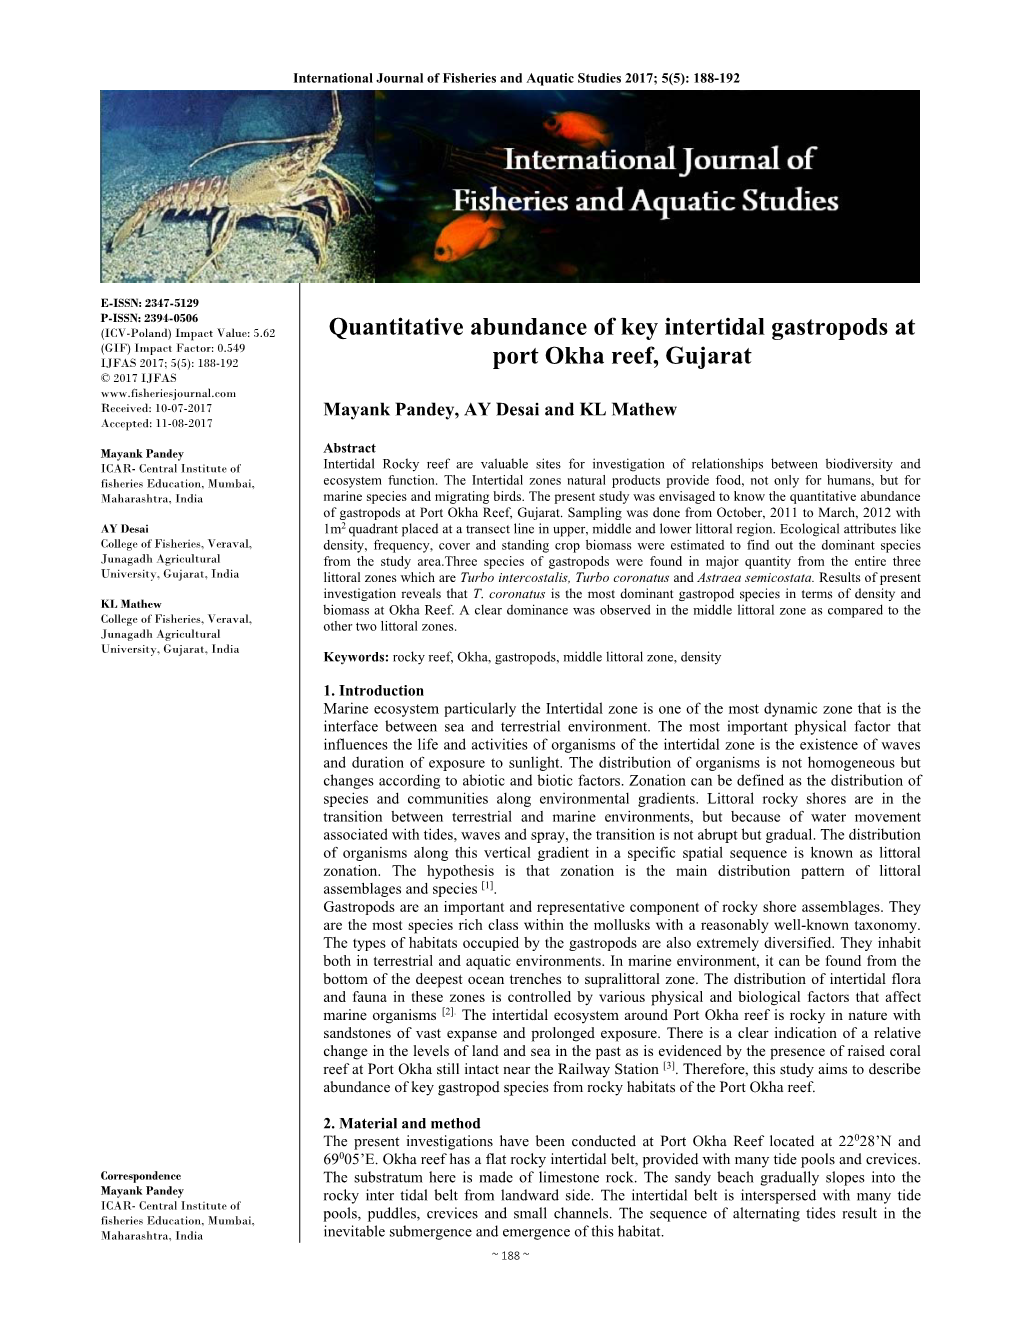 Quantitative Abundance of Key Intertidal Gastropods at Port Okha